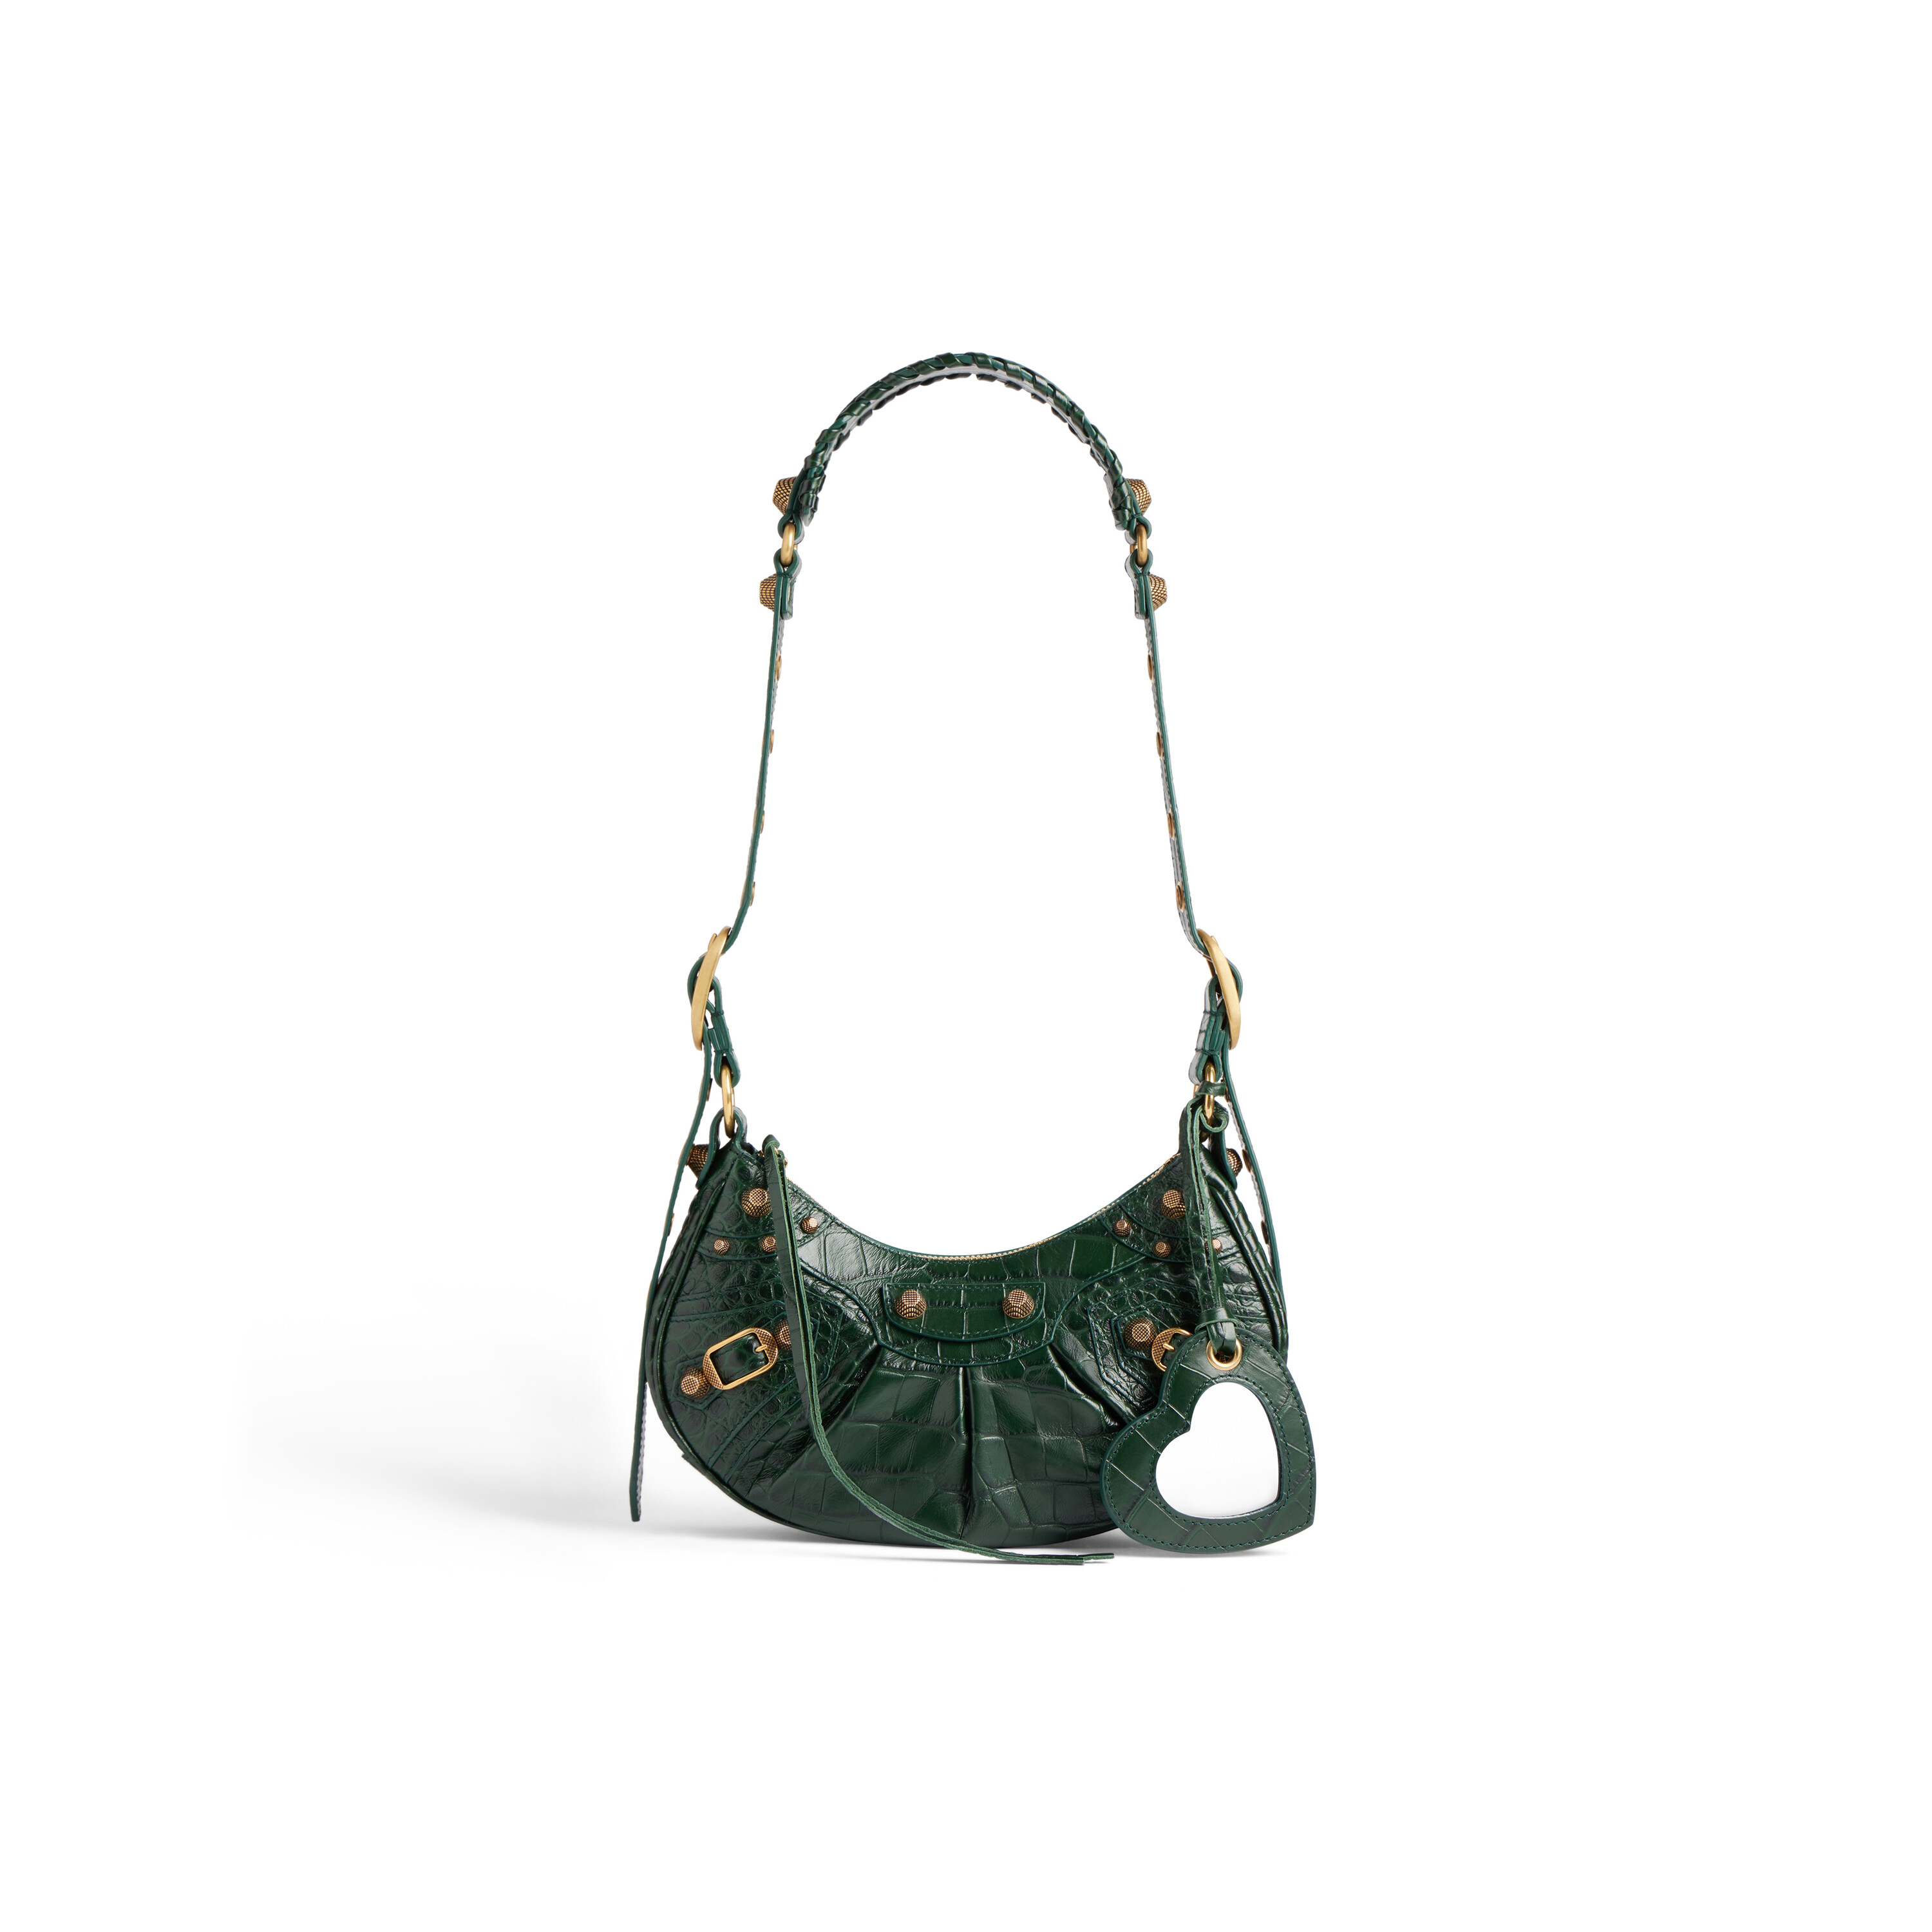 Balenciaga - Le Cagole green leather hobo bag 6713071VG9Y - buy